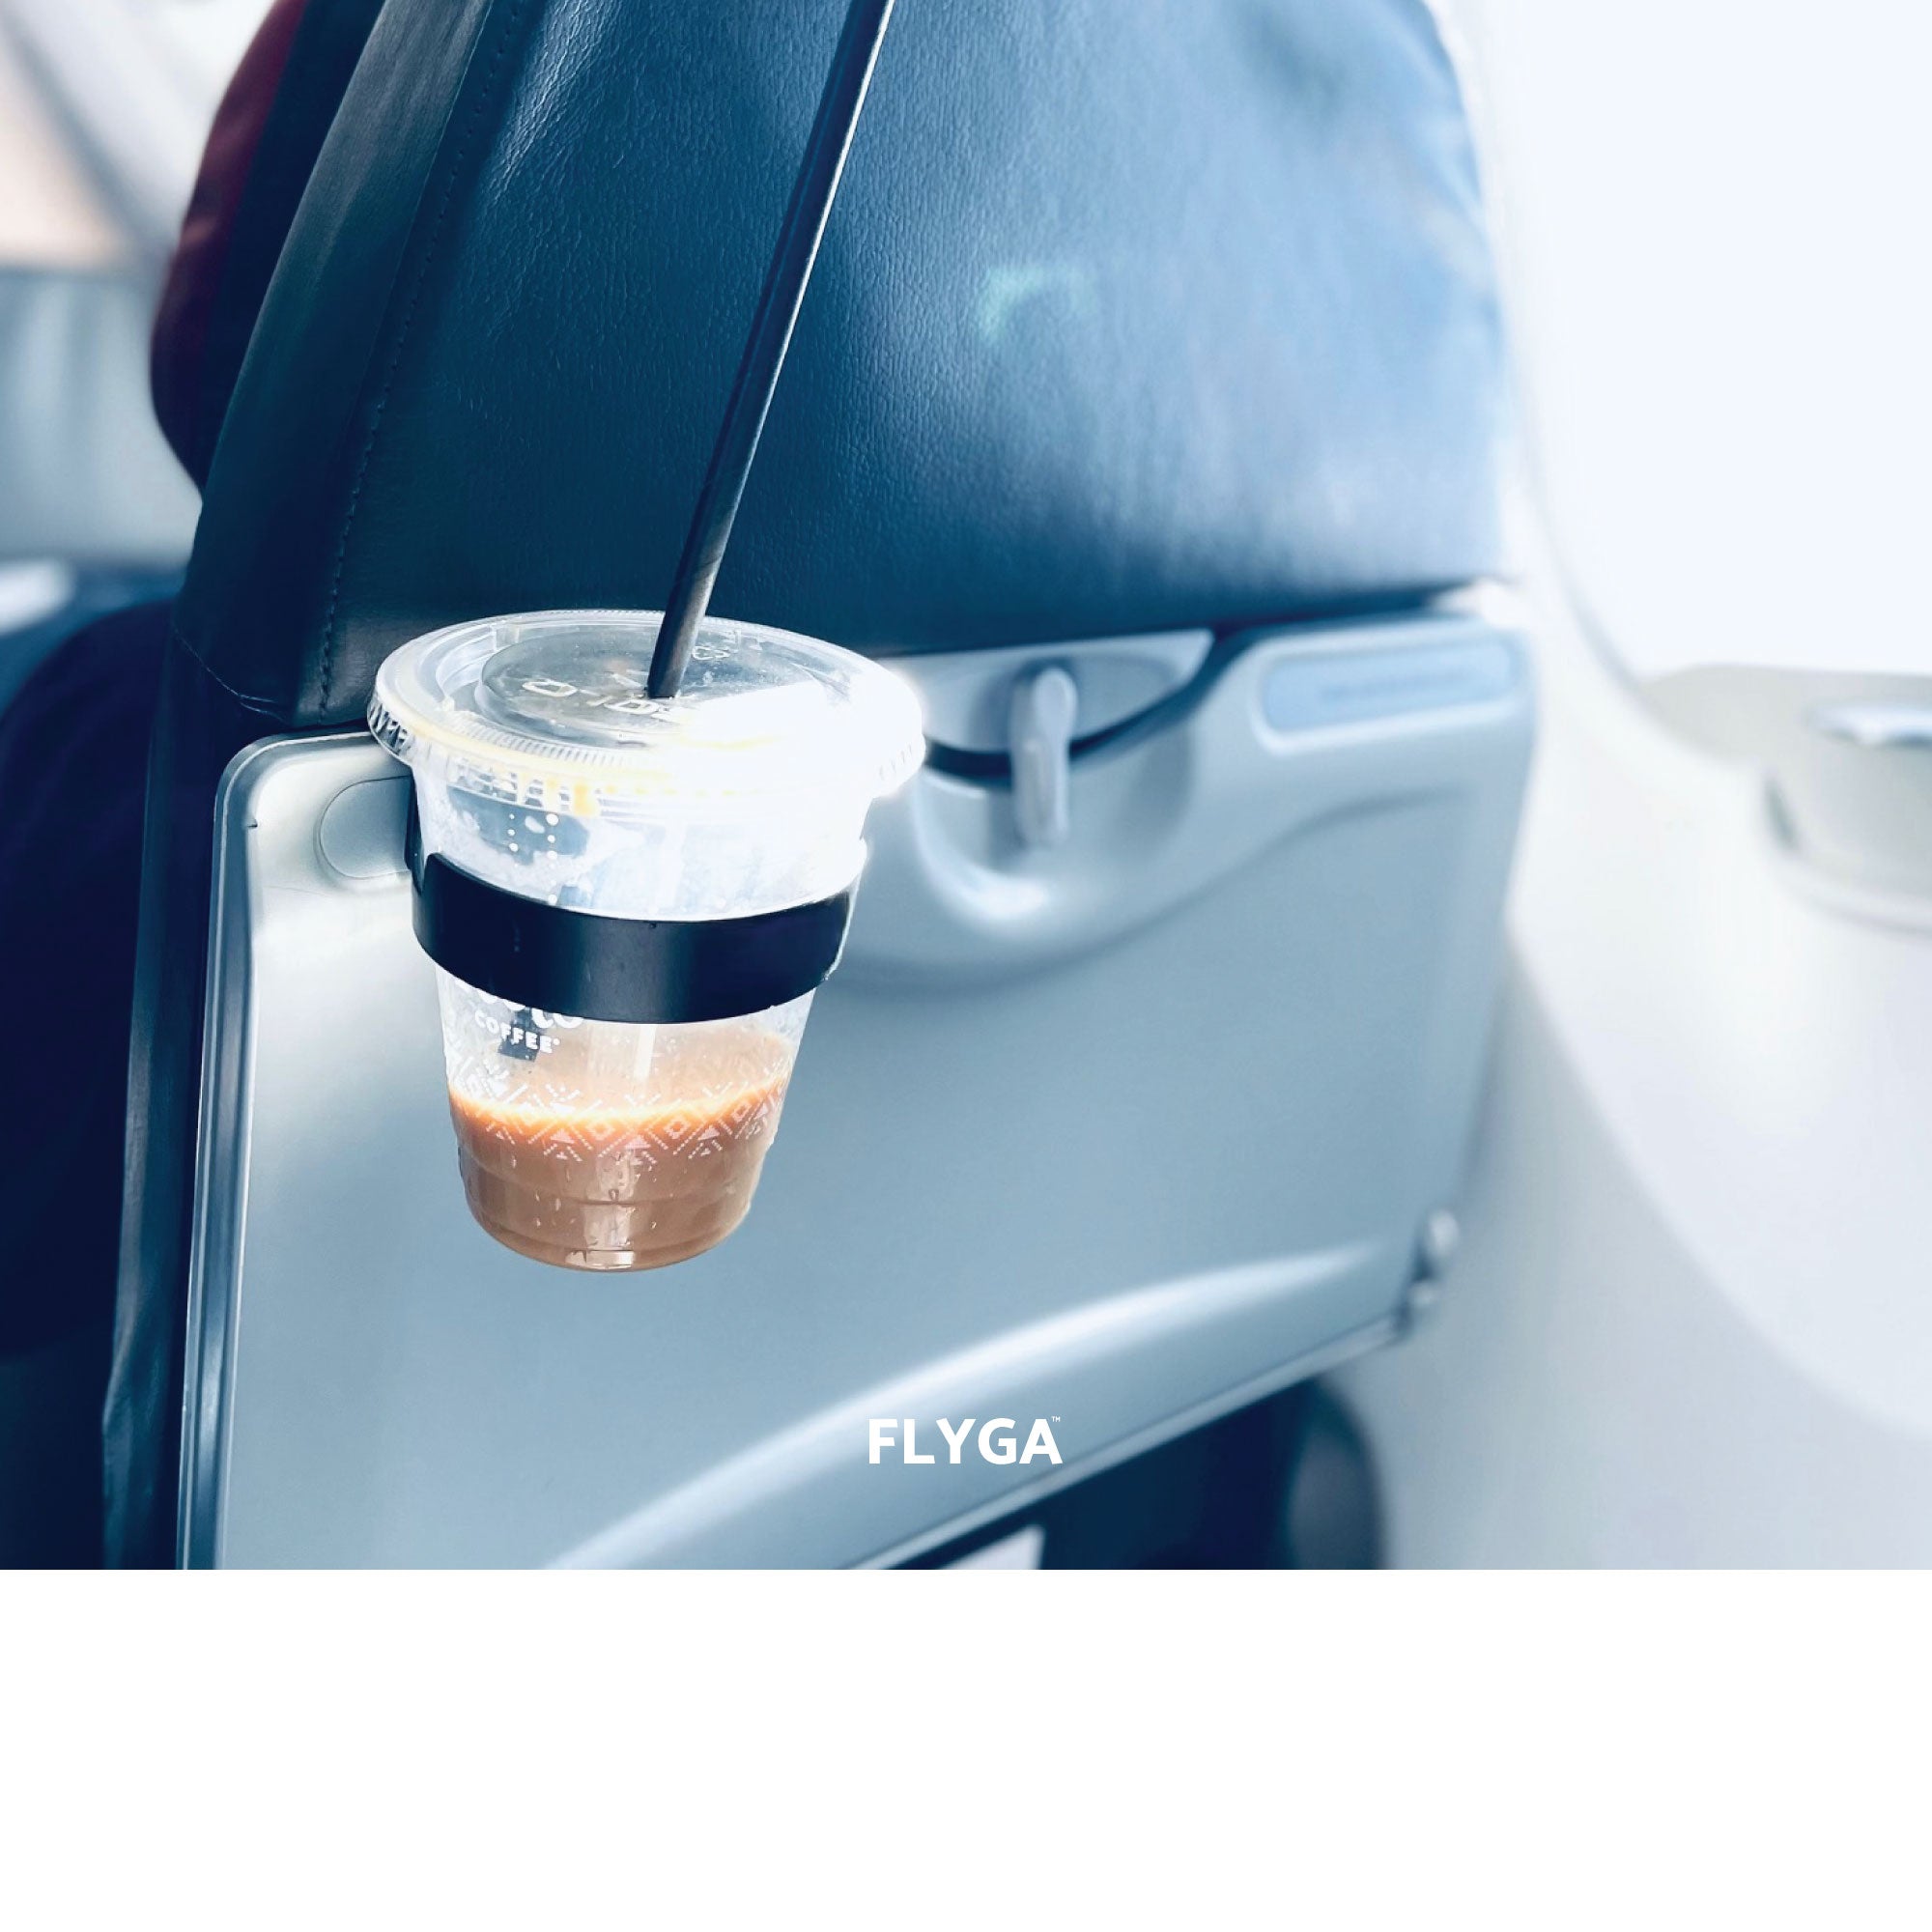 FLYGA Airplane Drink or Phone Holder Travel Accessory (Black)